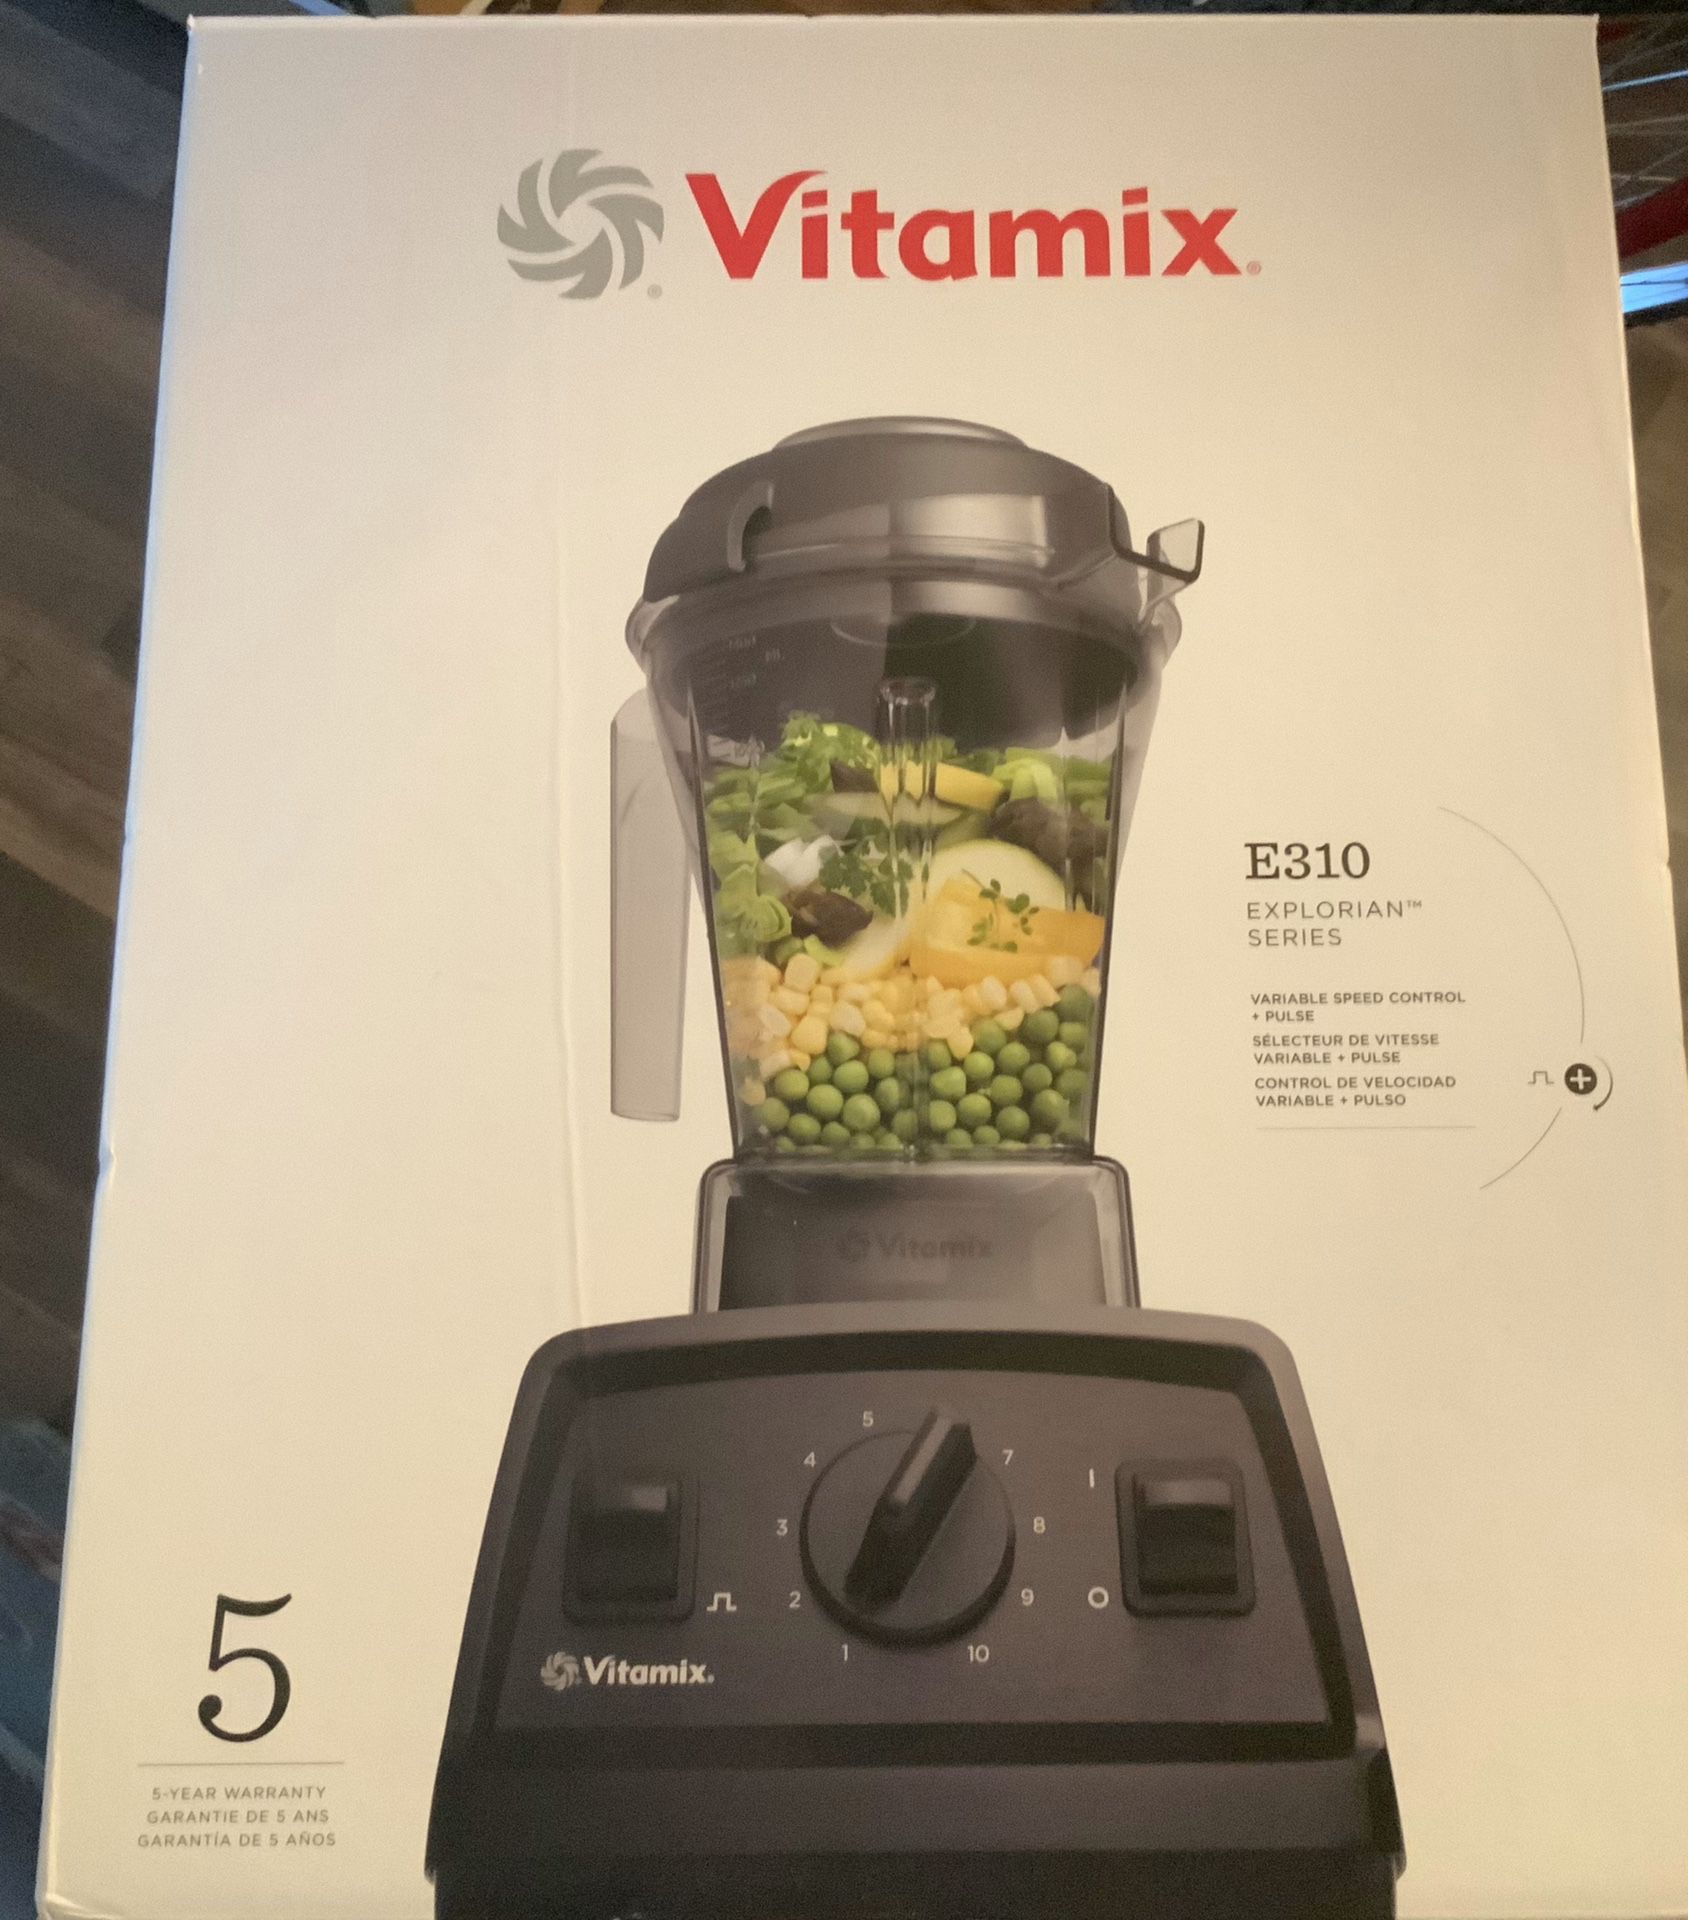 Vitamix blender E310 explorian series